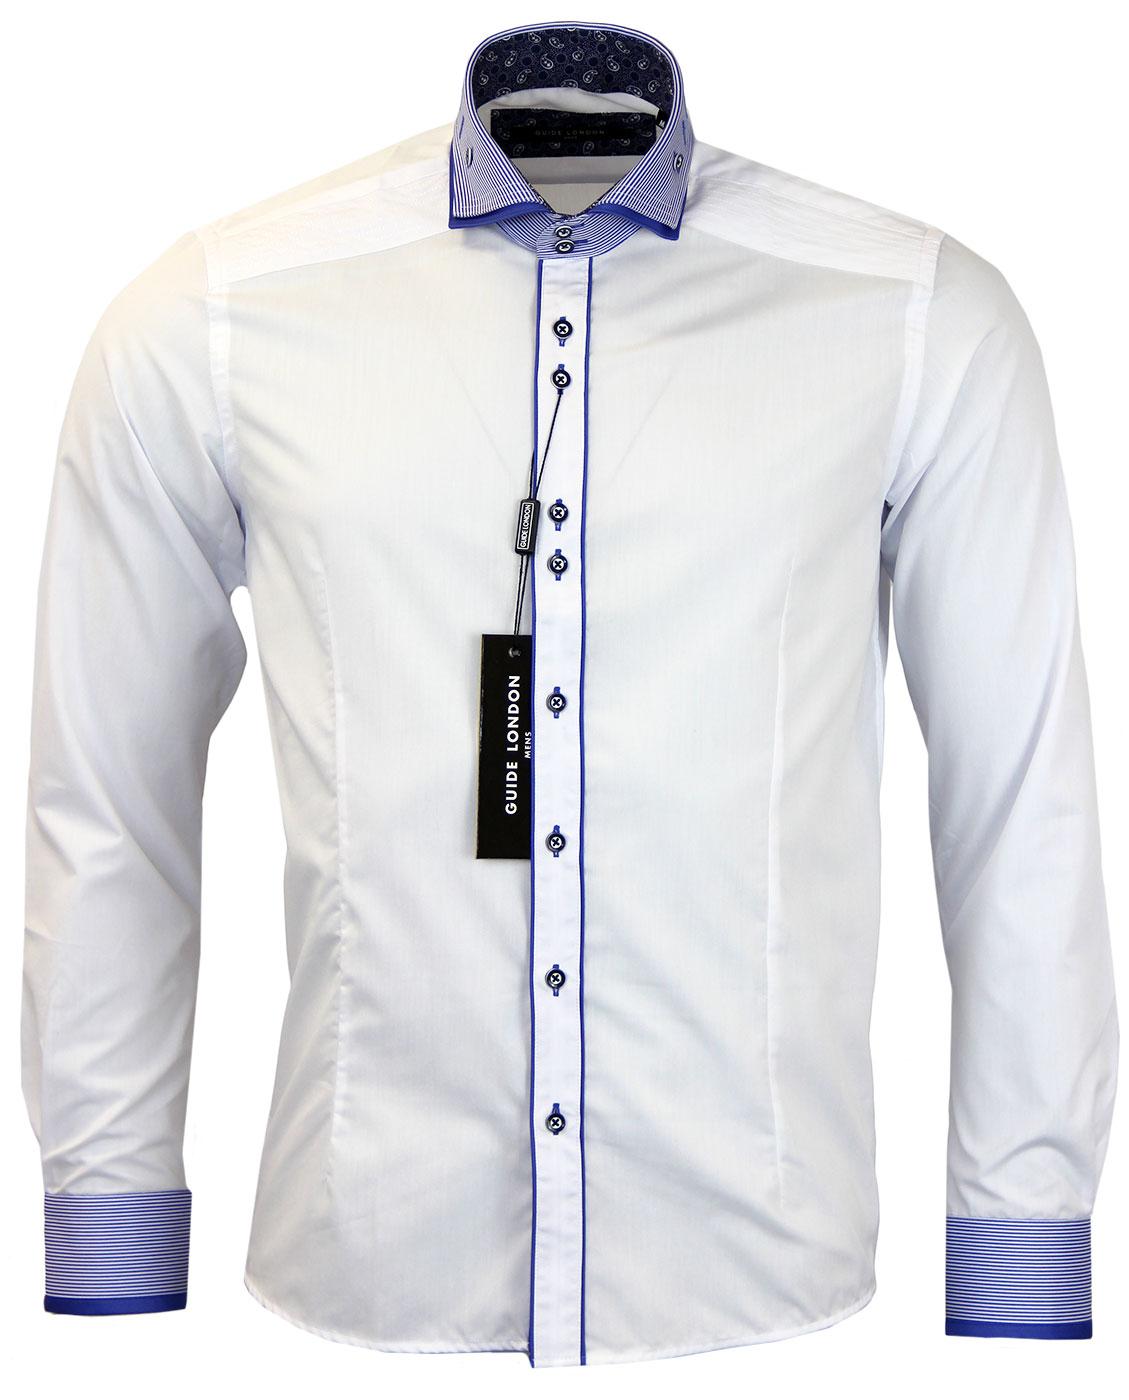 GUIDE LONDON Stripe Double Collar Retro 60s Mod Shirt White